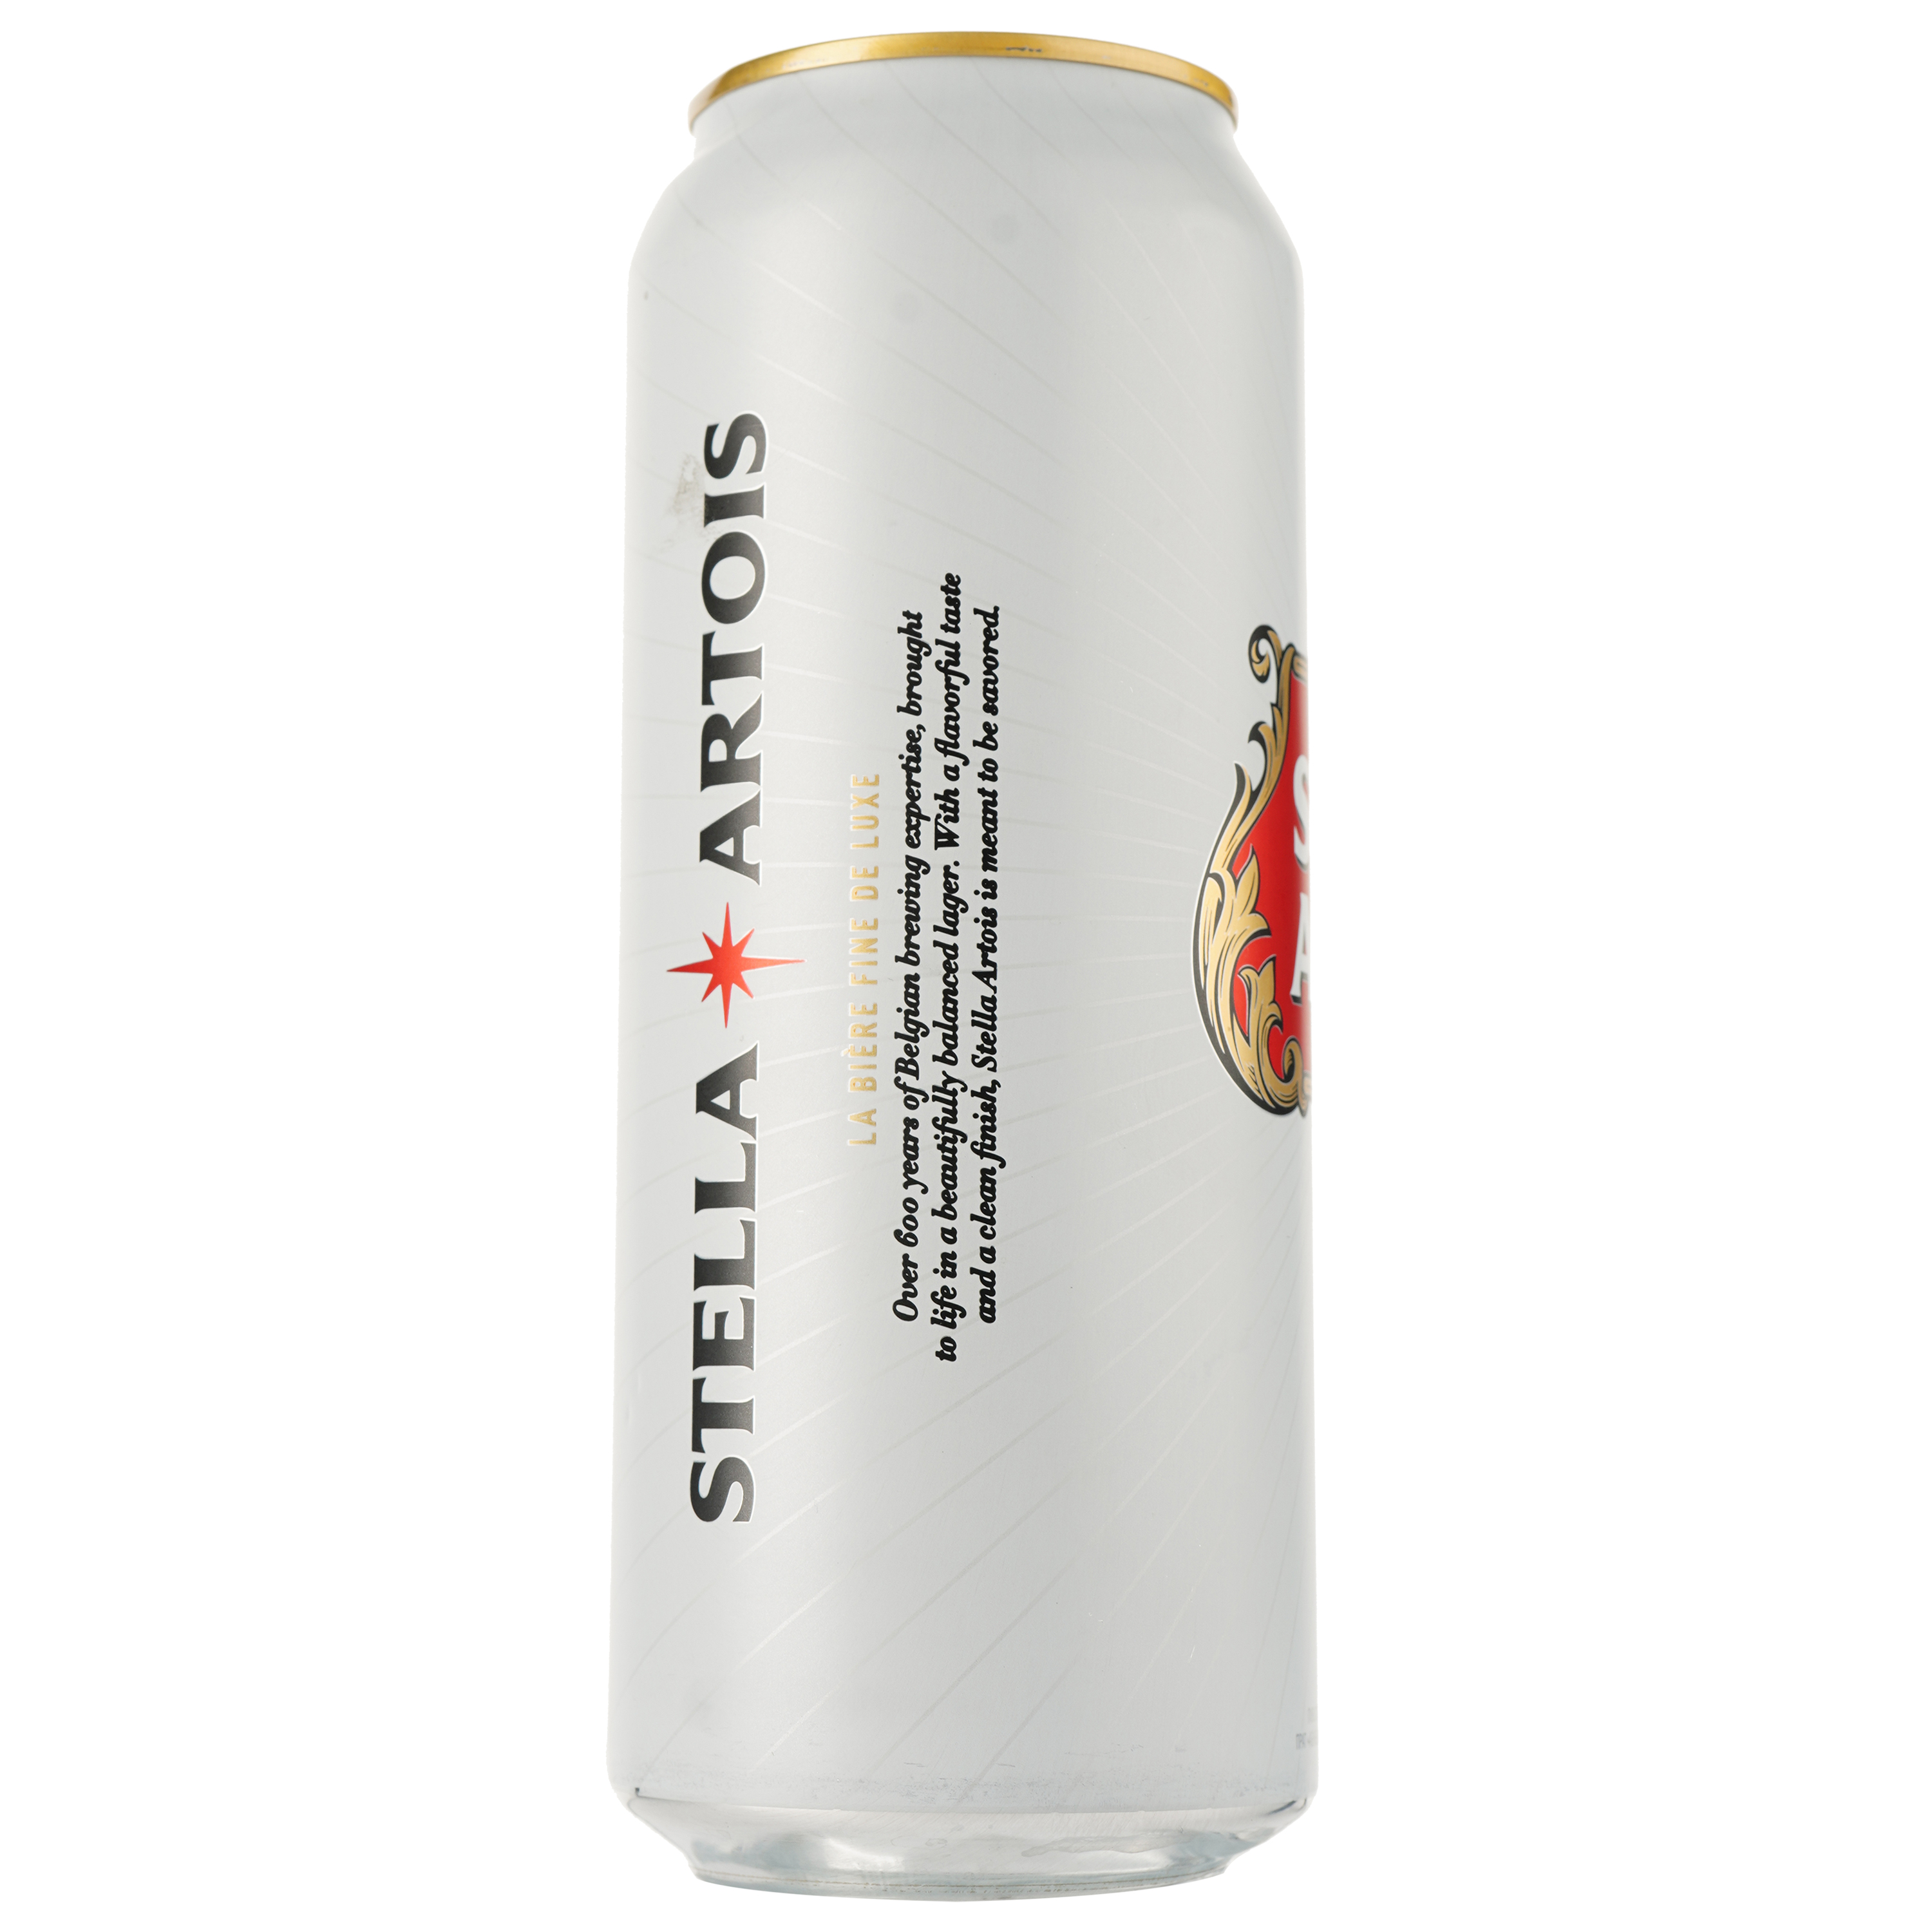 Пиво Stella Artois, светлое, 5%, ж/б, 0,5 л (64712) - фото 2